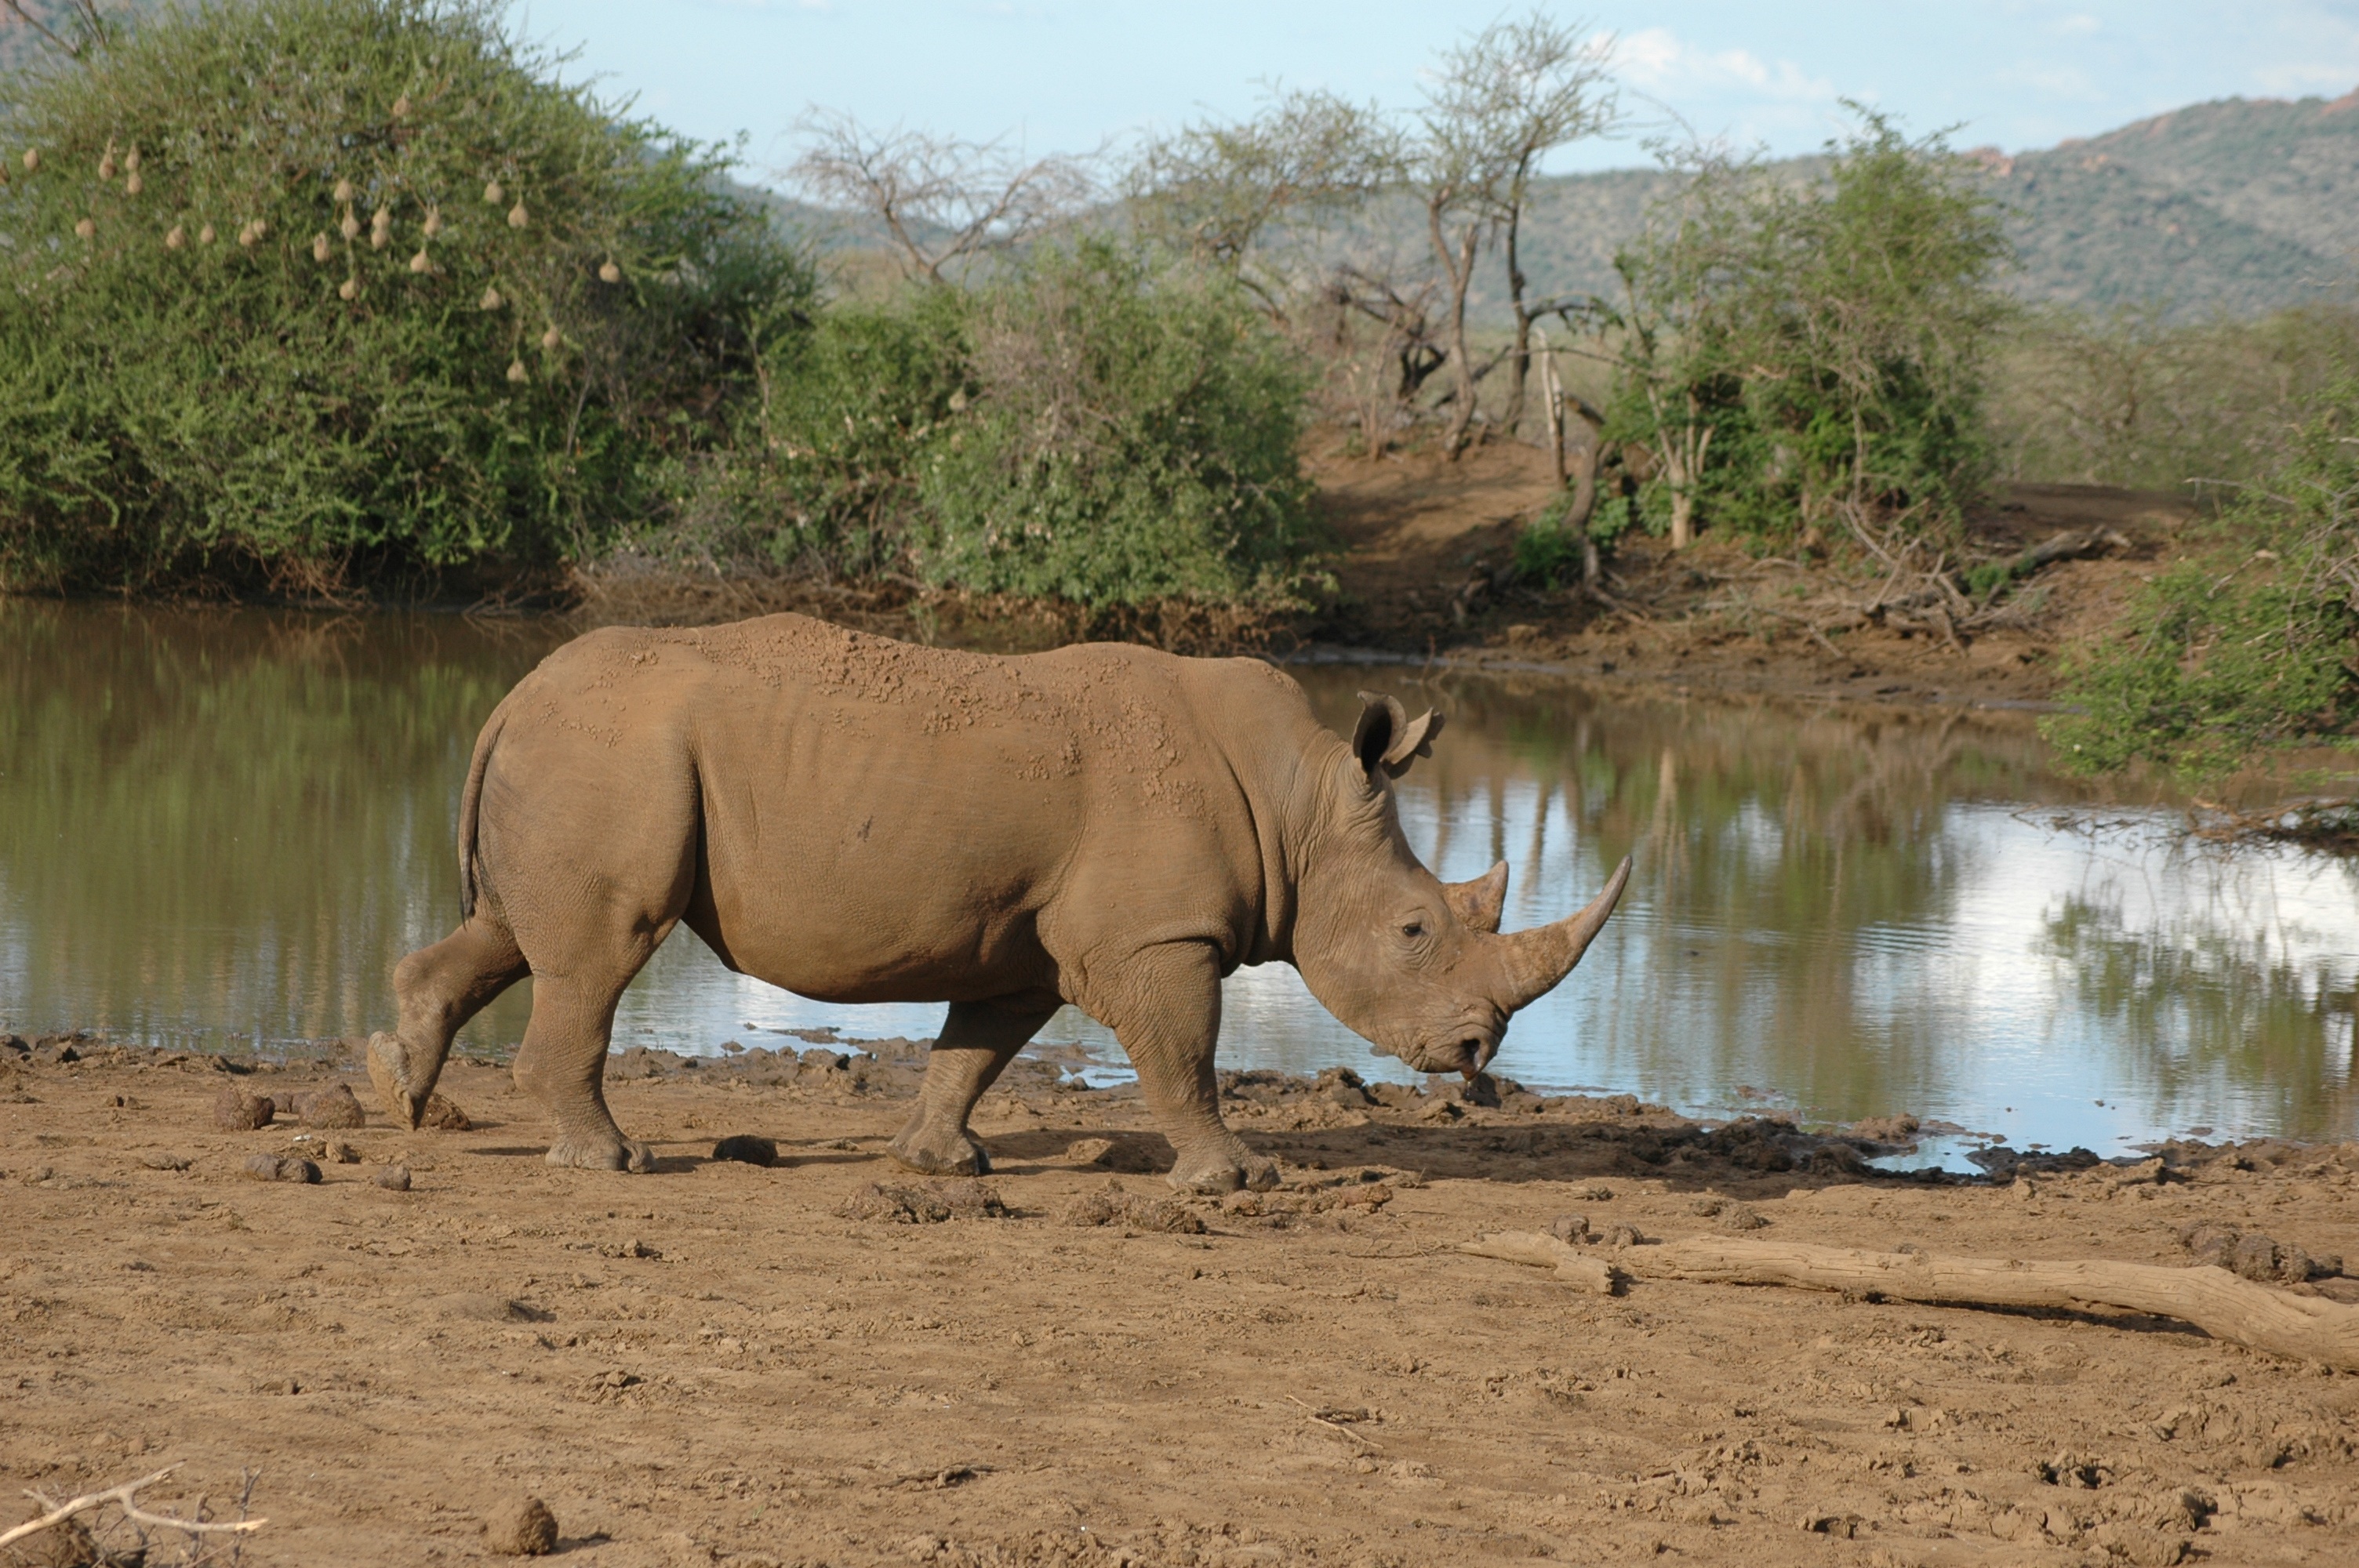 Rhinoceros in a wildlife reserve in South Africa by HaLu2803